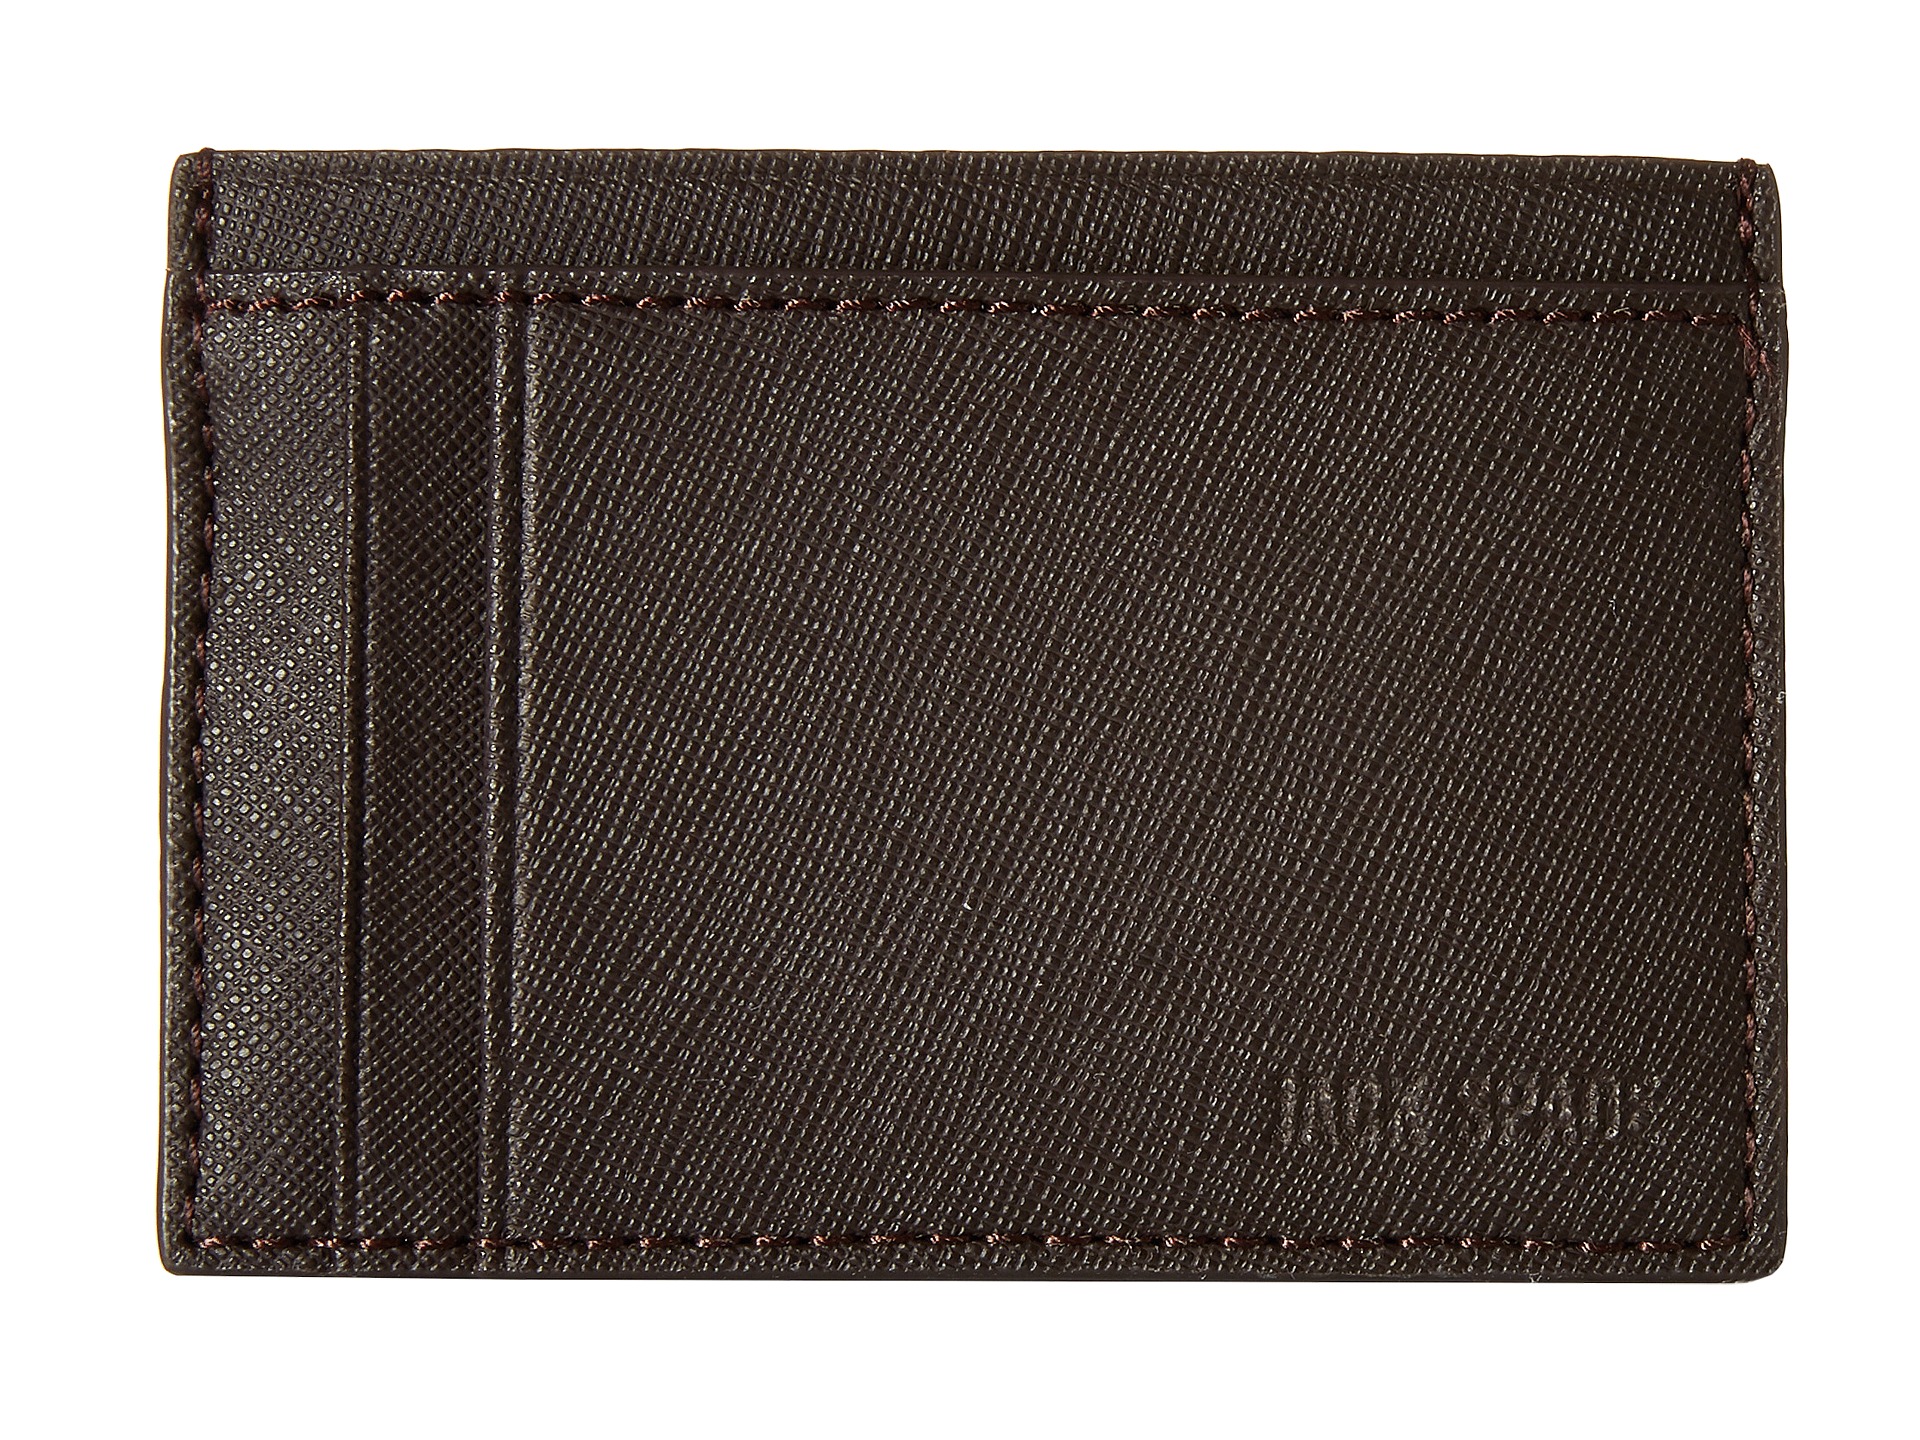 Jack Spade Barrow Leather ID Wallet Brown